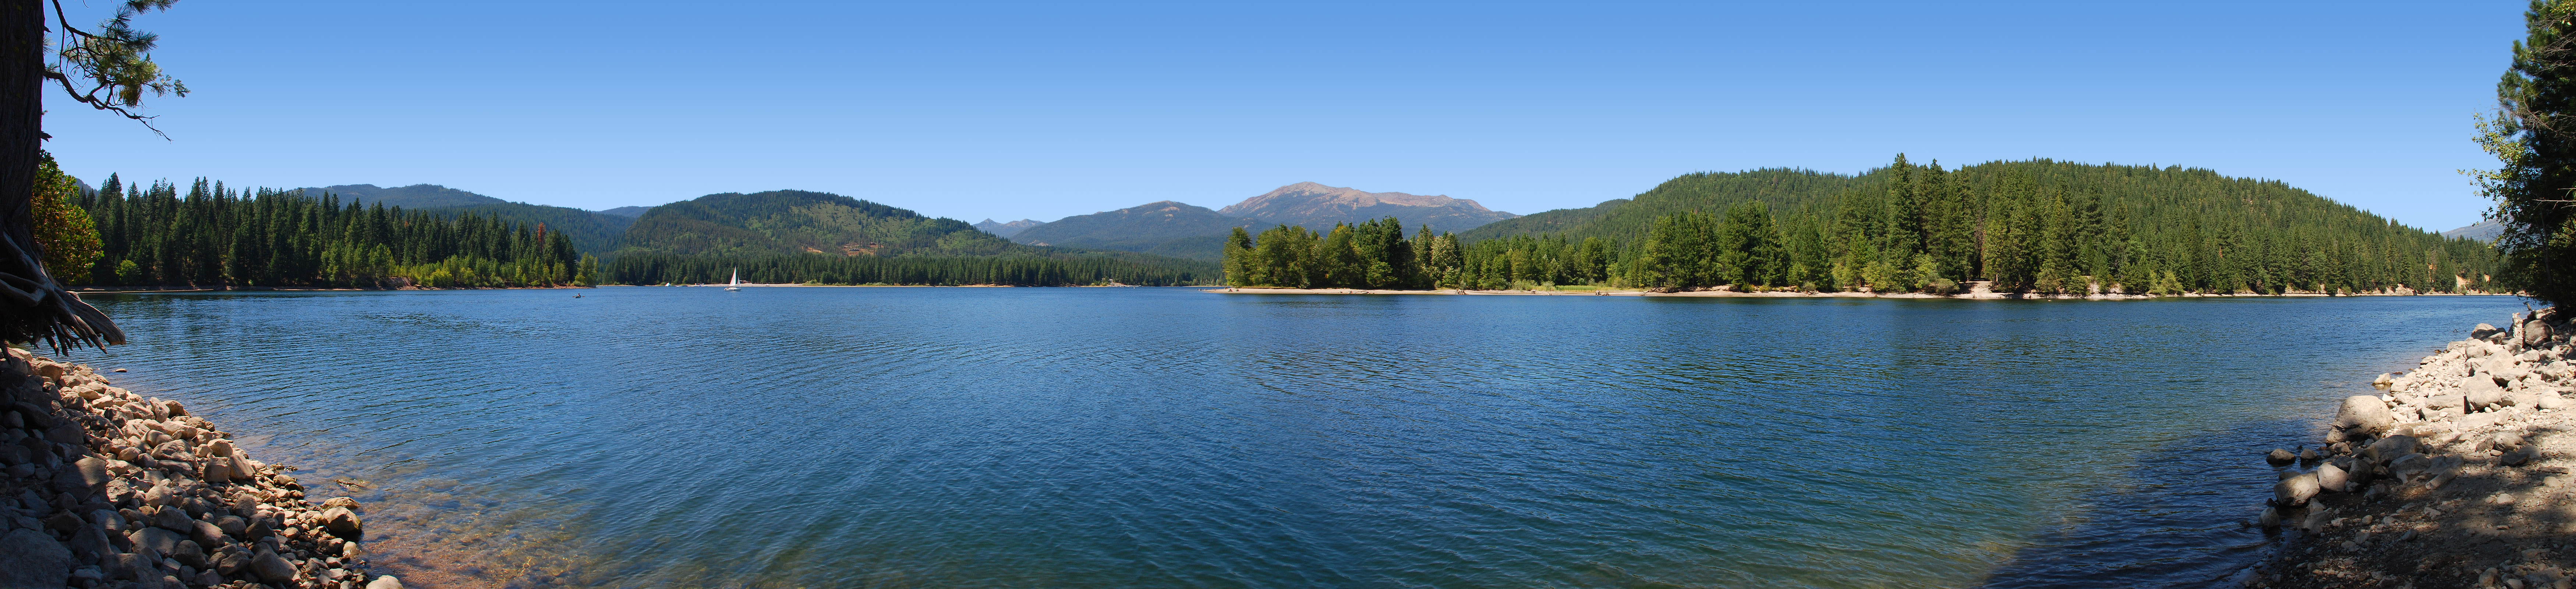 Lake Siskiyou Panorama Travel Wallpaper And Stock Photo